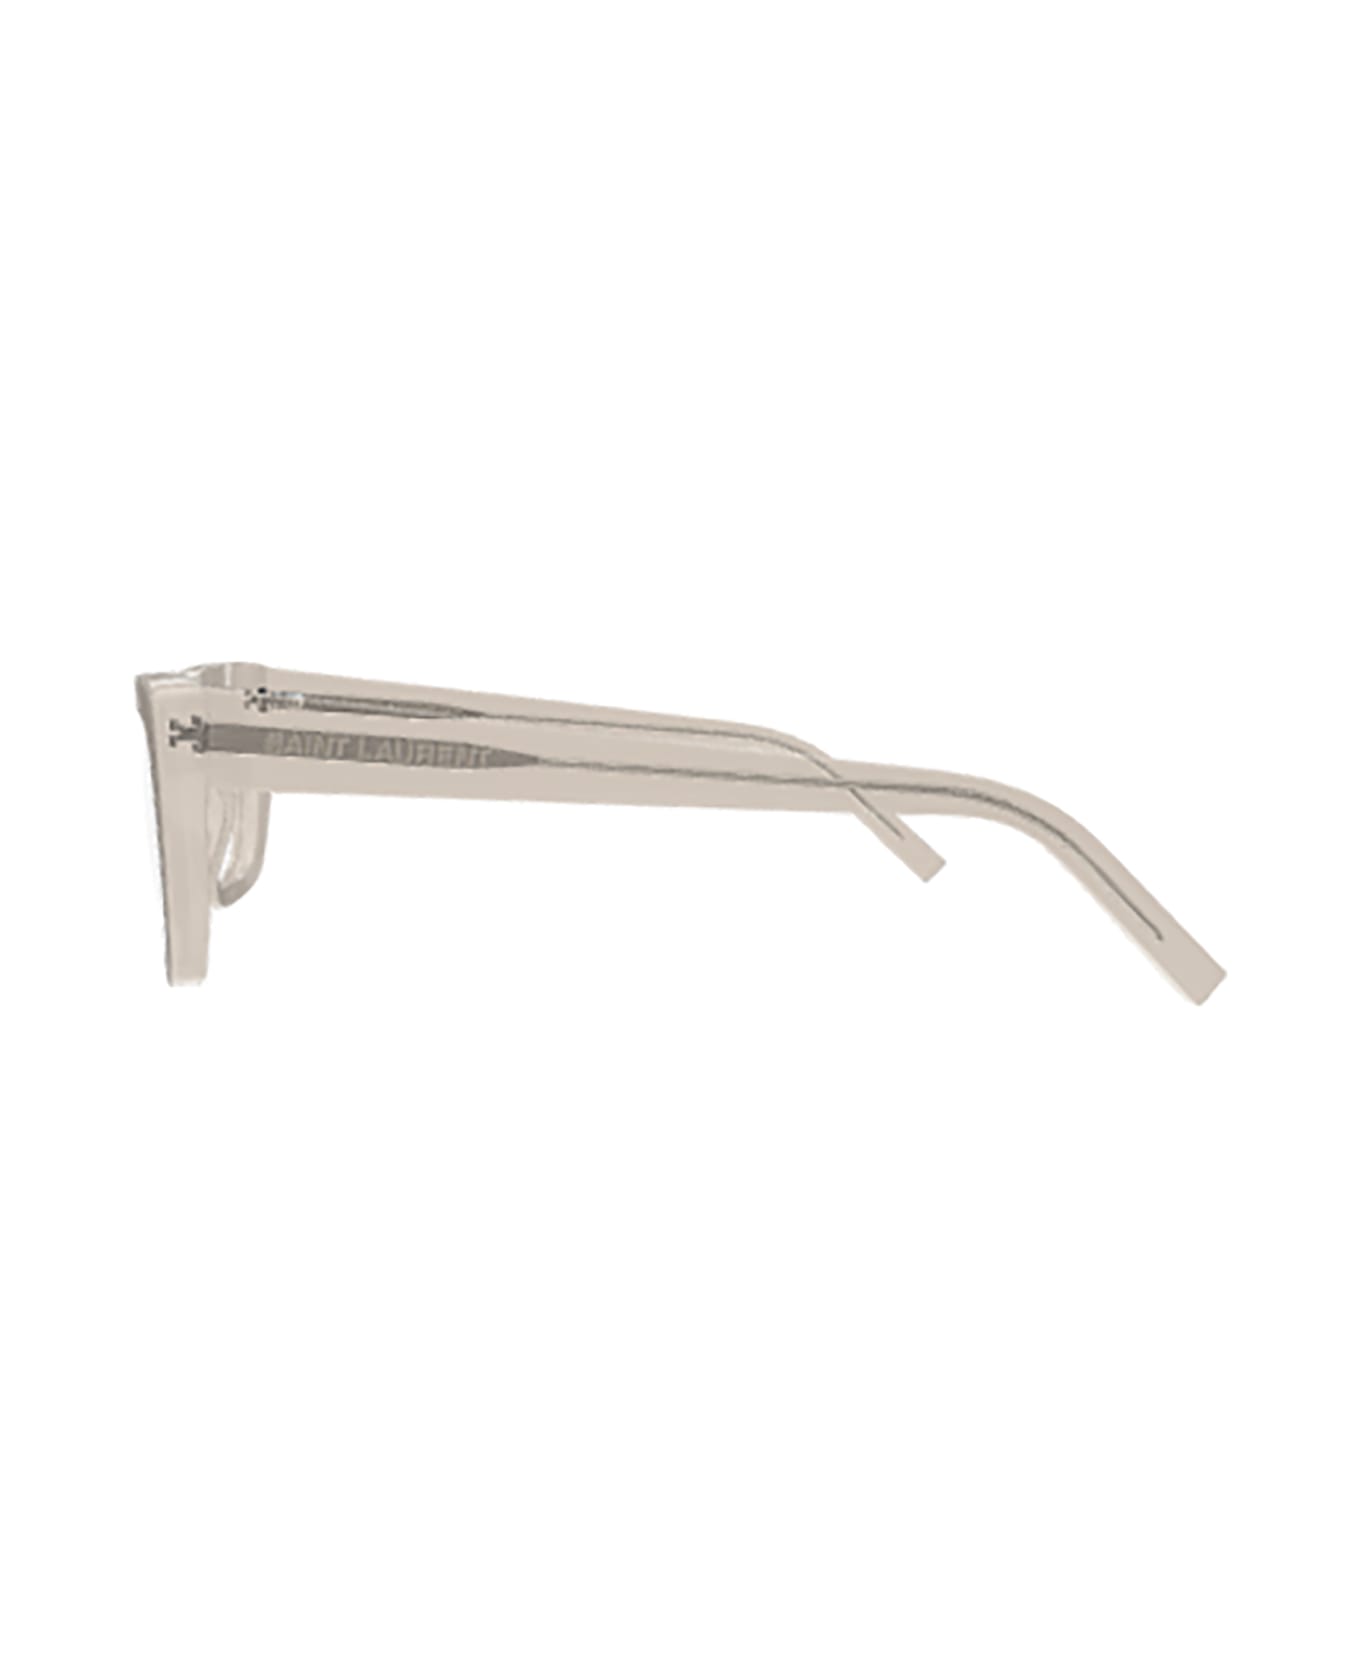 Saint Laurent Eyewear SL 276 MICA OPT Eyewear - Beige Beige Transpare